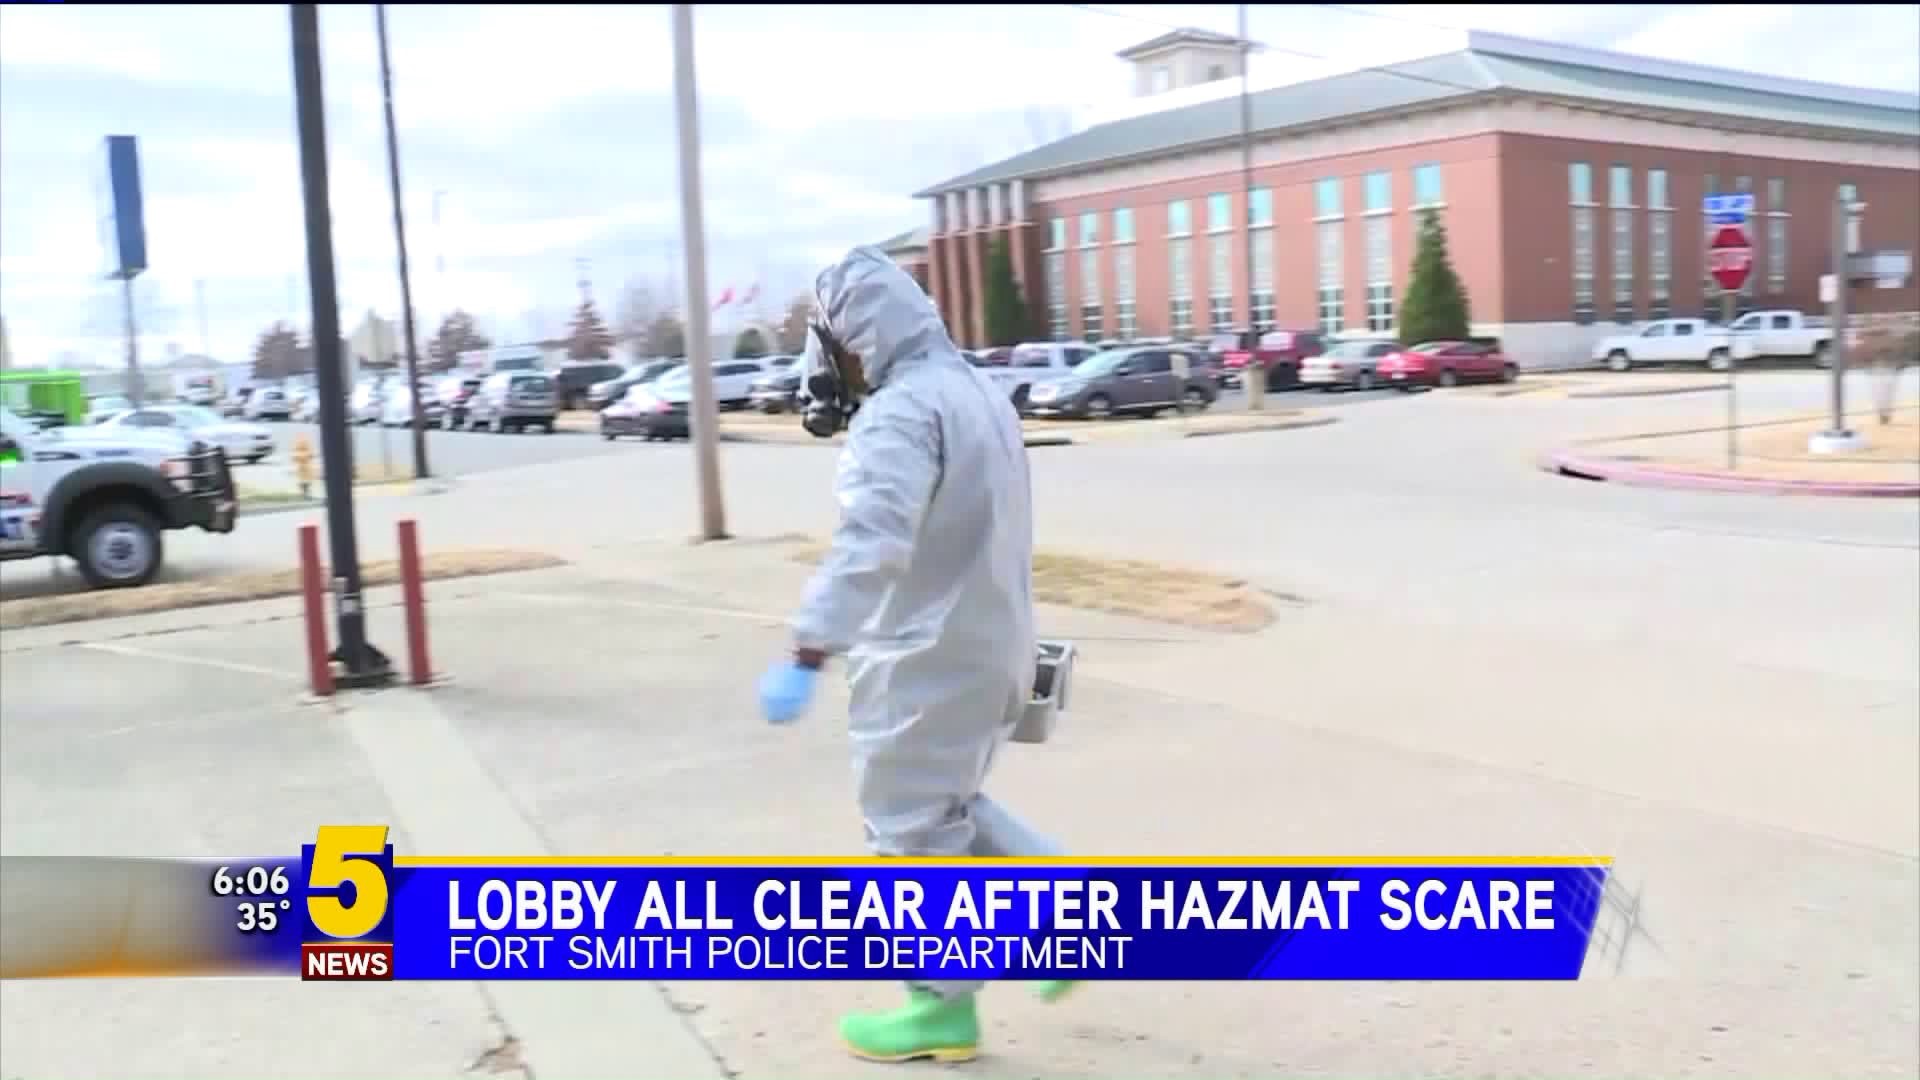 FSPD Lobby All Clear After Hazmat Scare